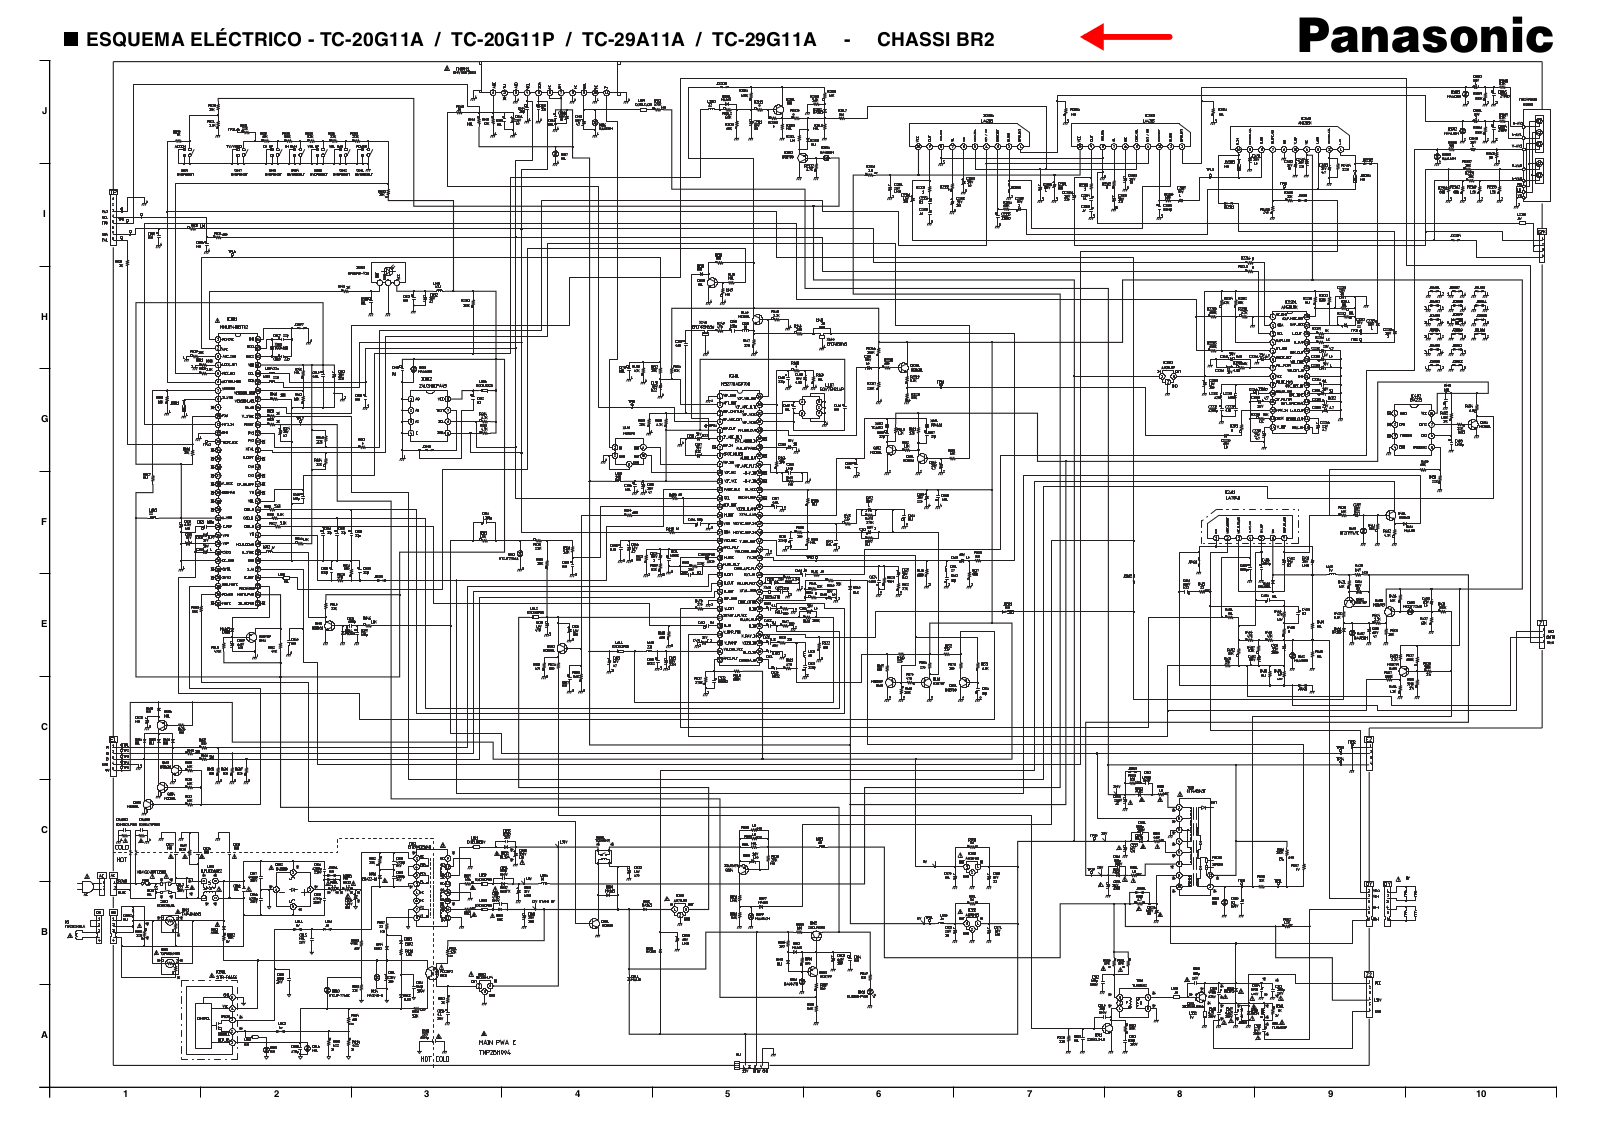 Panasonic BR2 Schematic